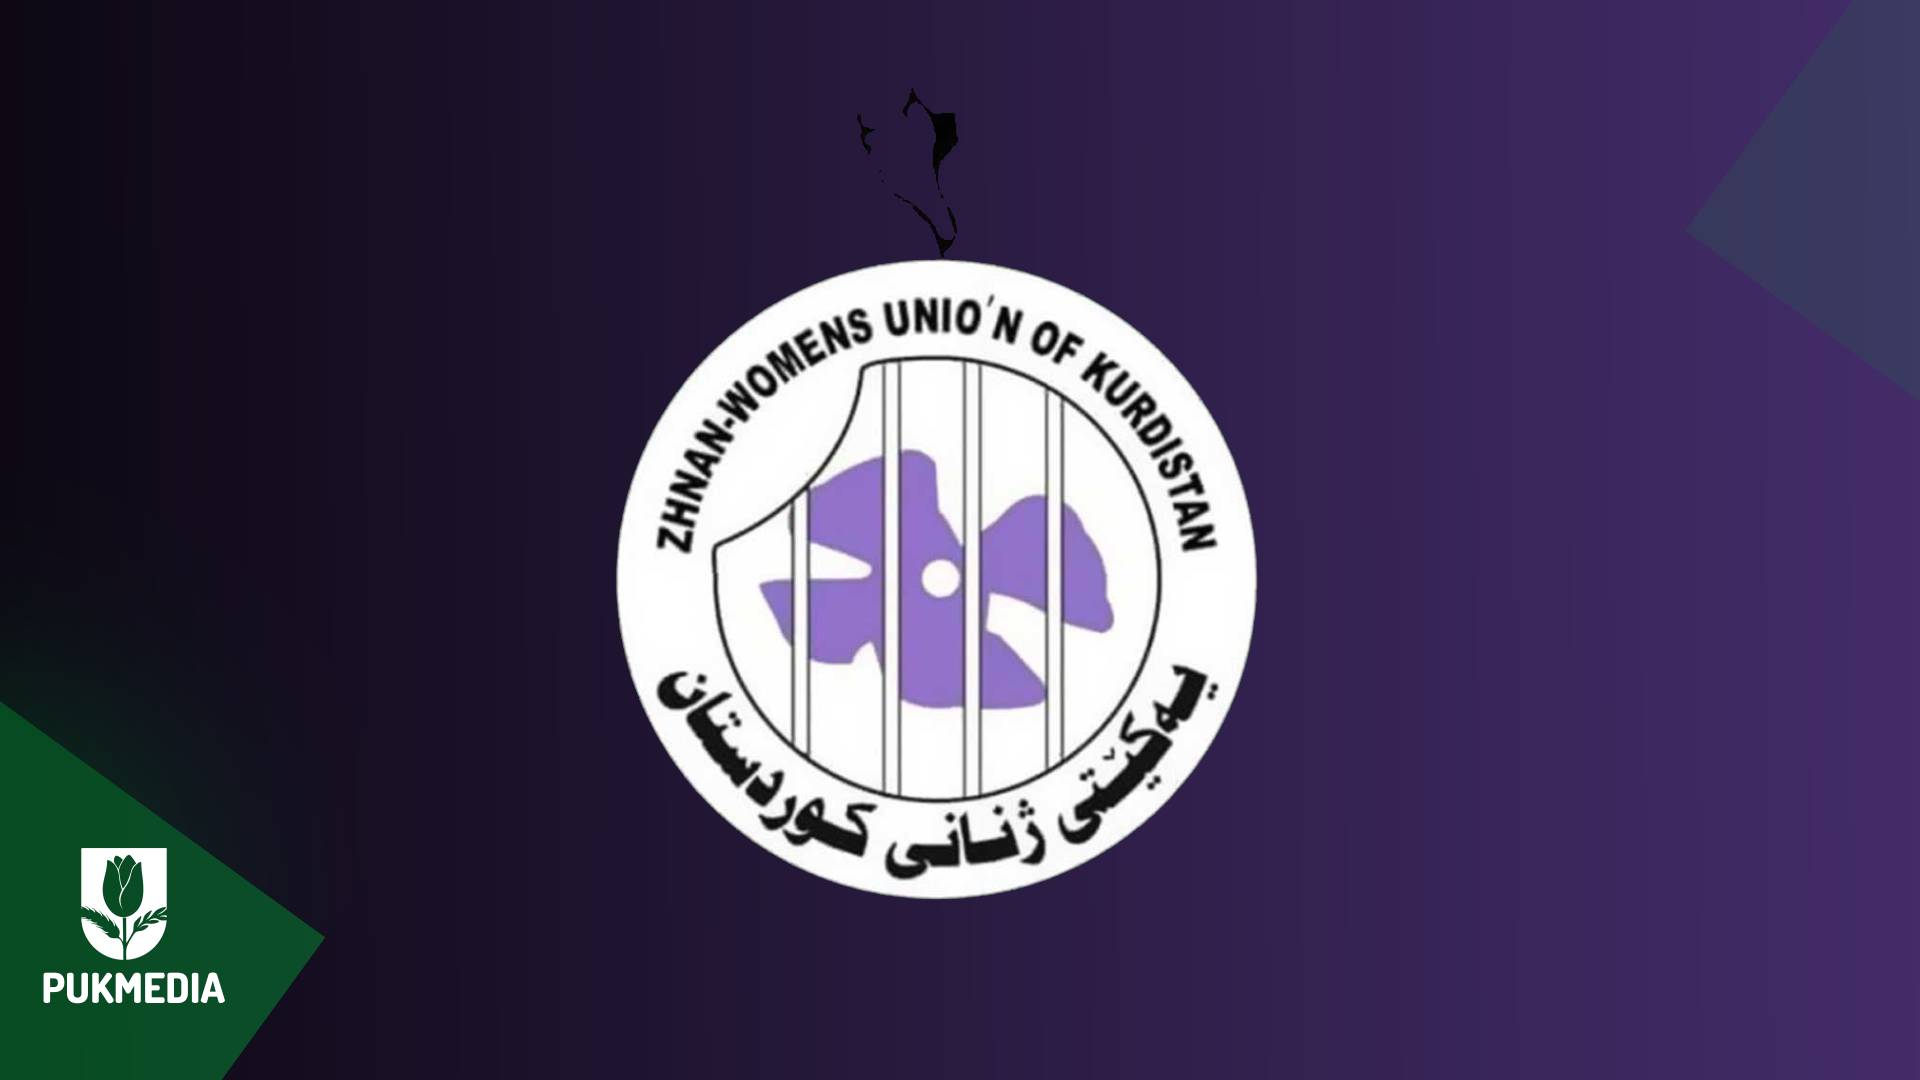  Women's Union of Kurdistan logo.